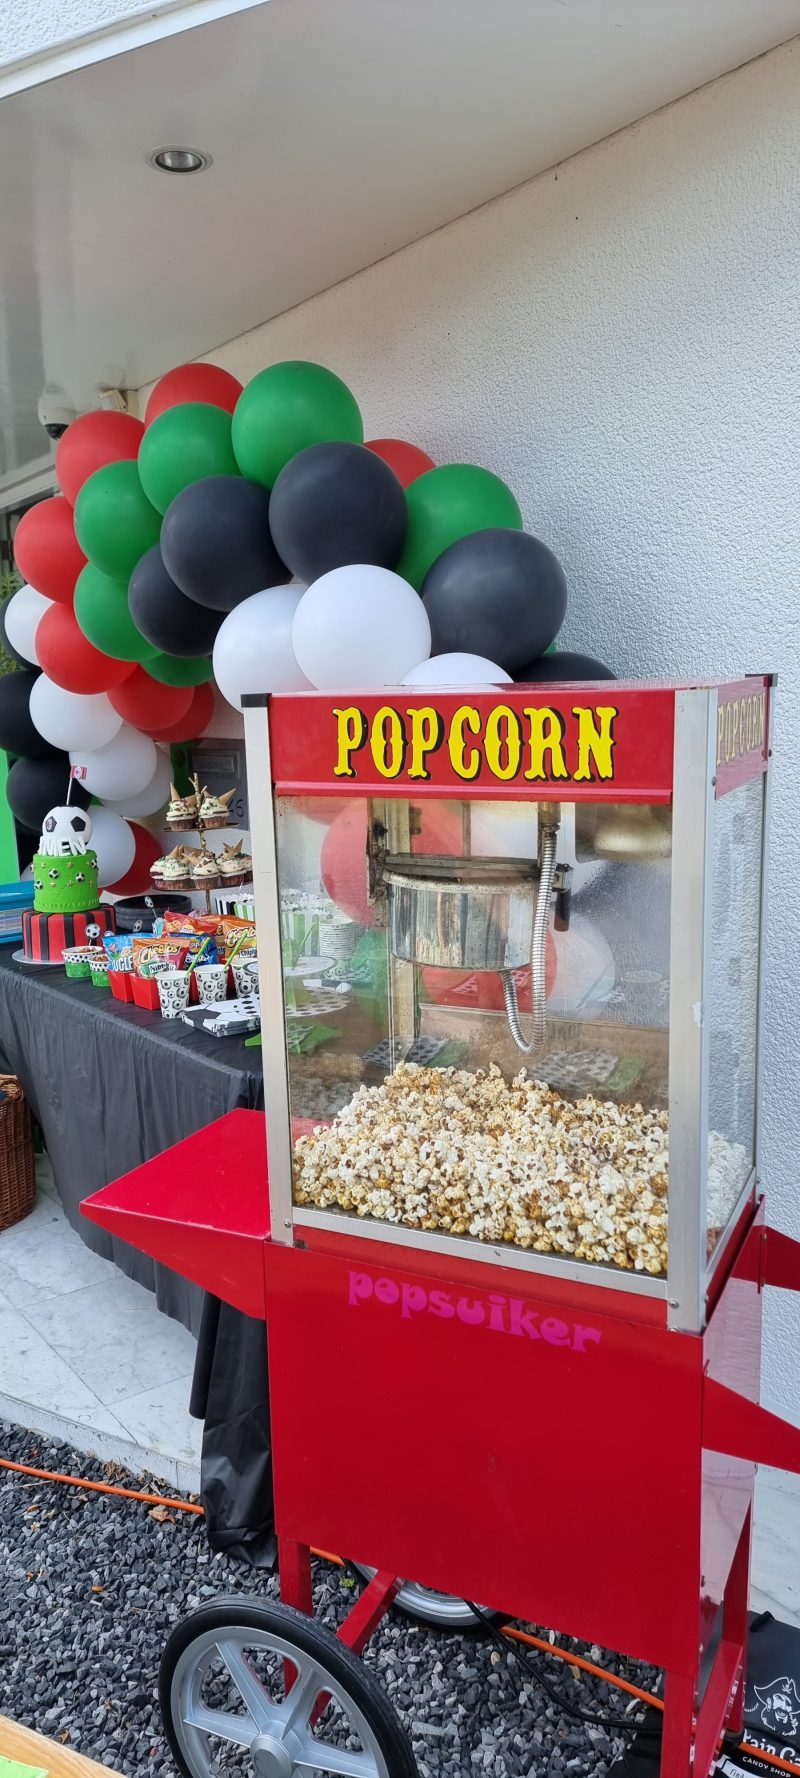 Popcorn machine te huur